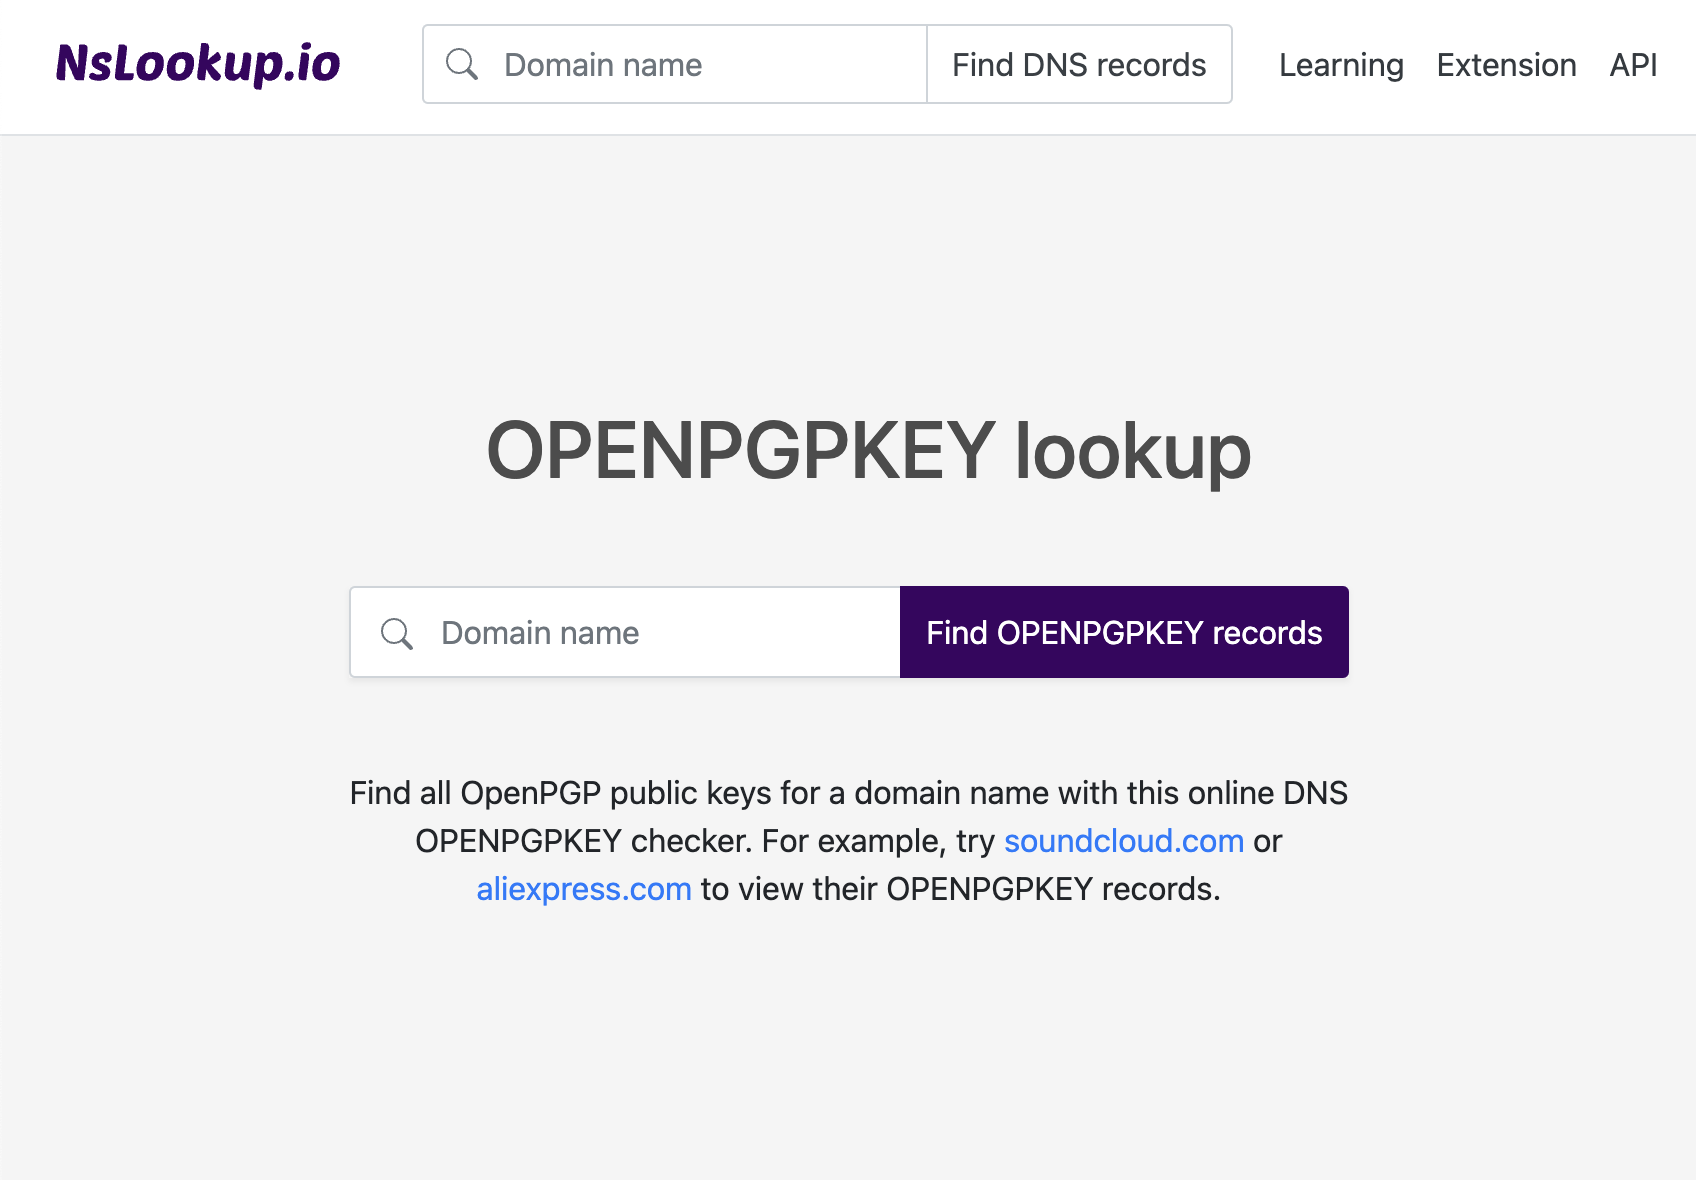 Open the OPENPGPKEY lookup tool